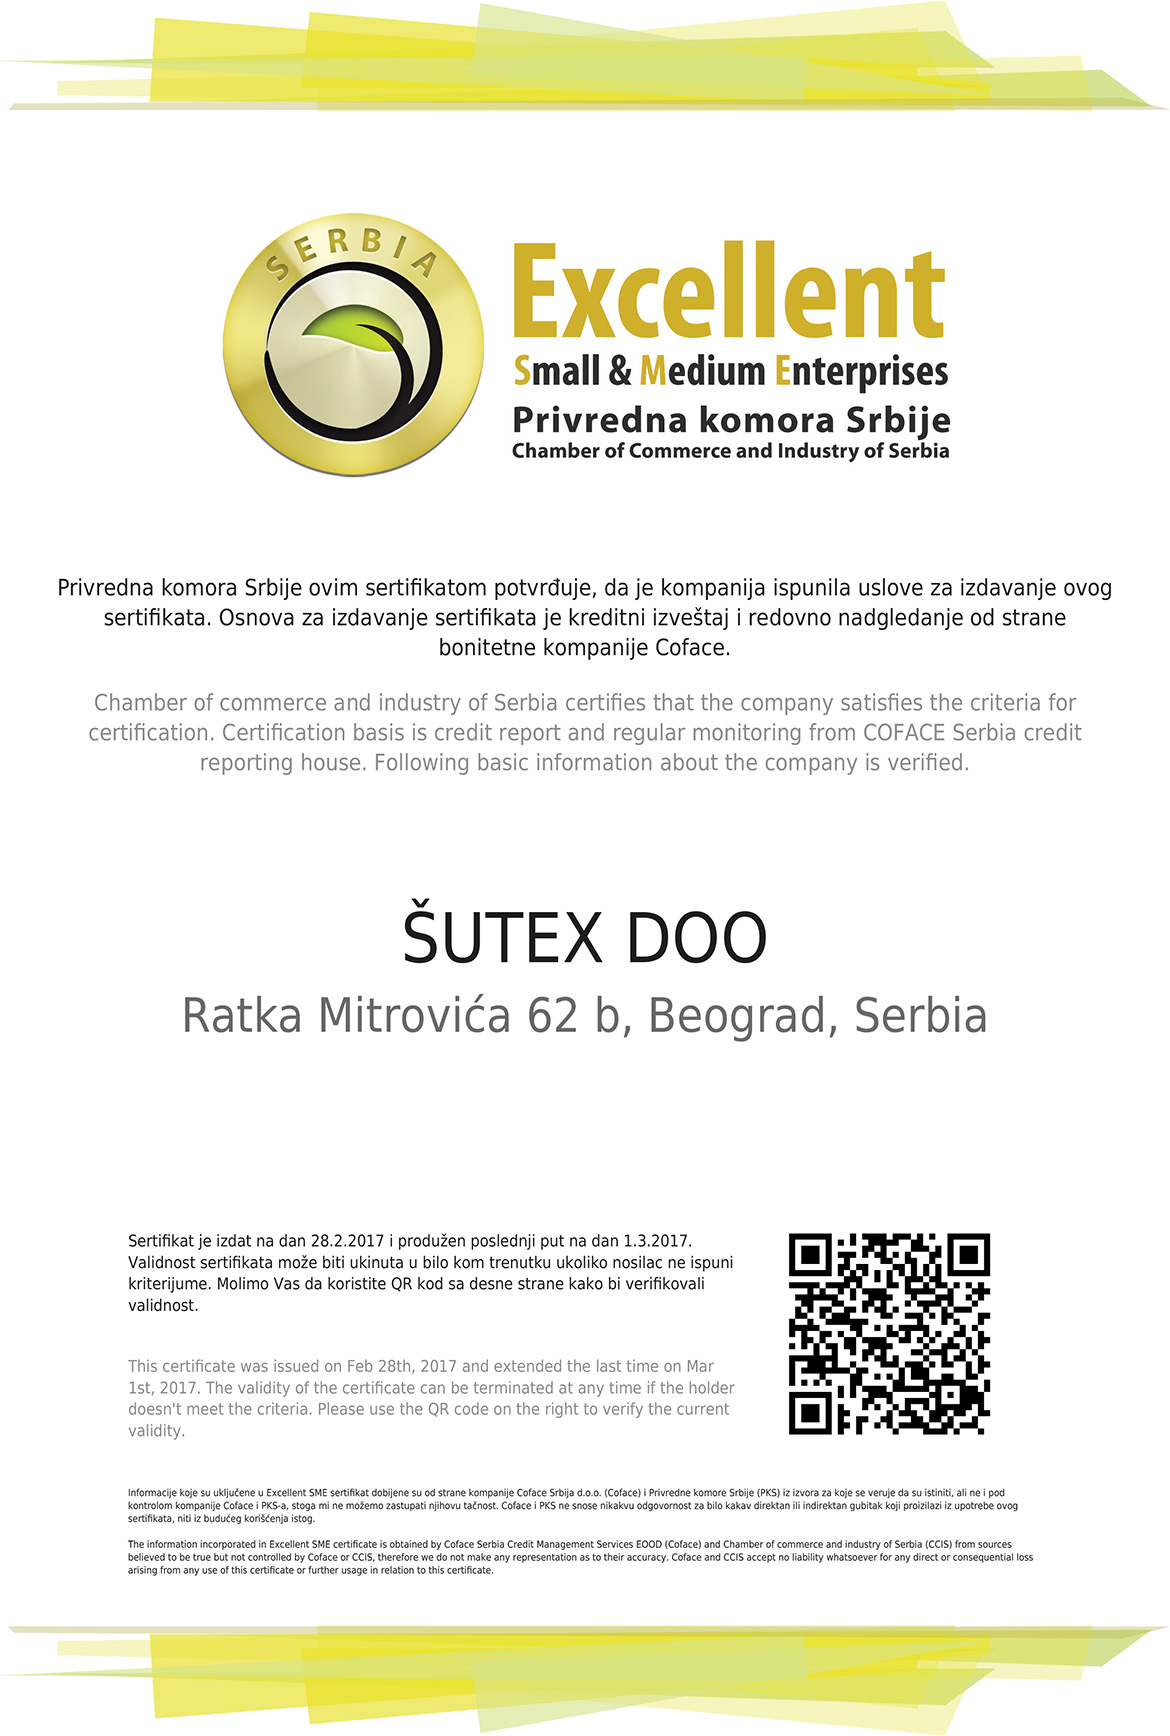 Excellent SME Certificate